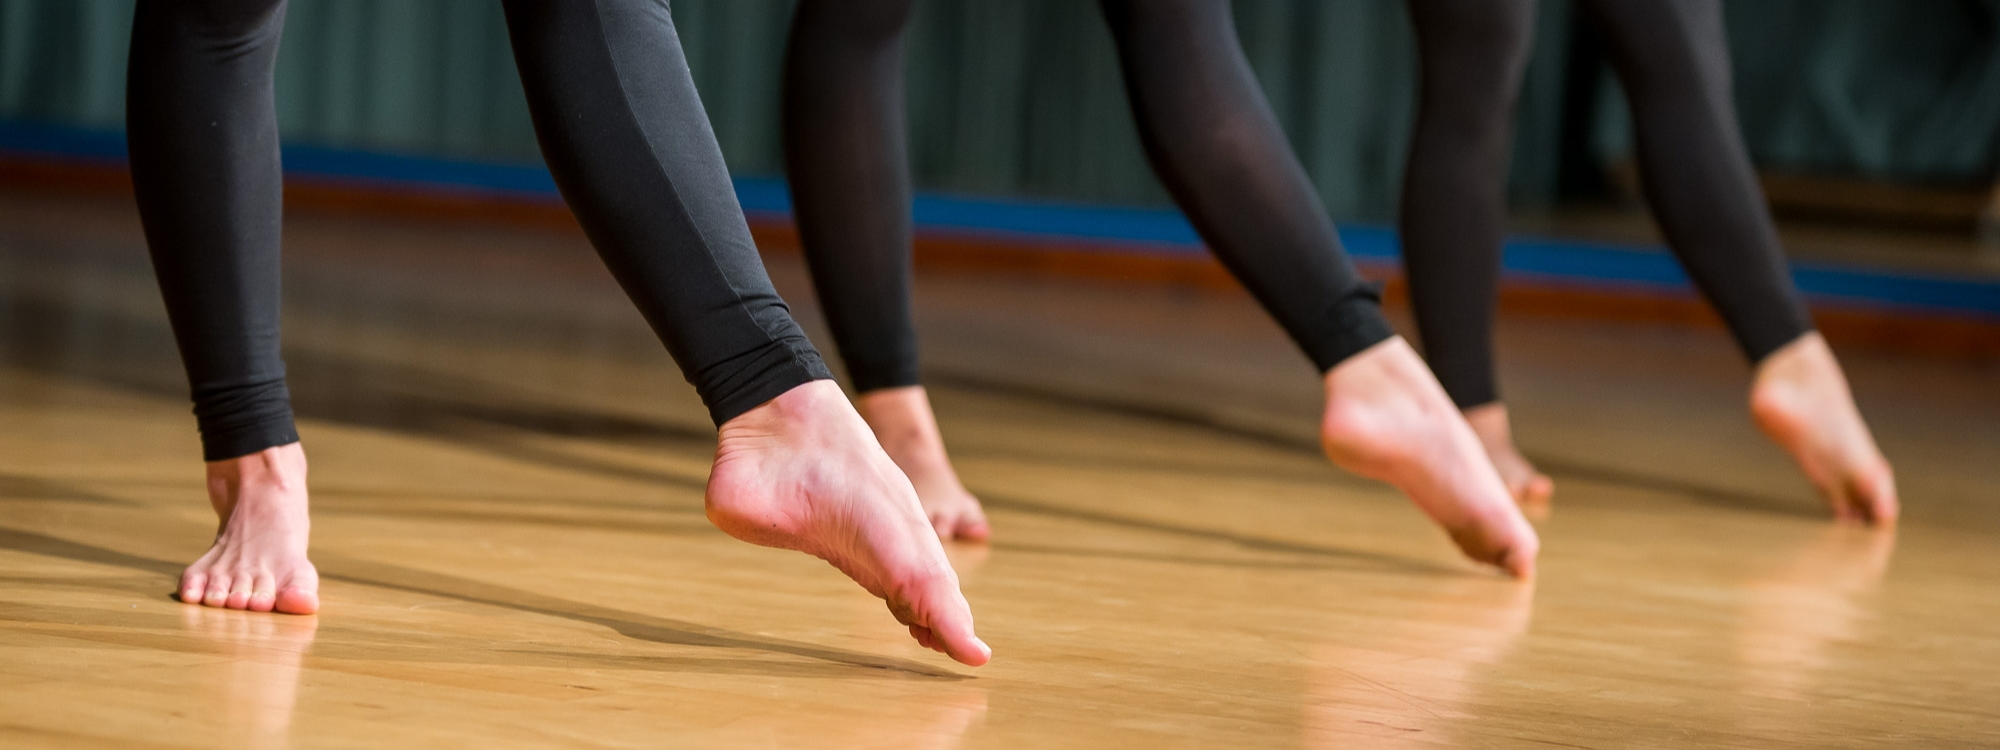 Dance Image Feet